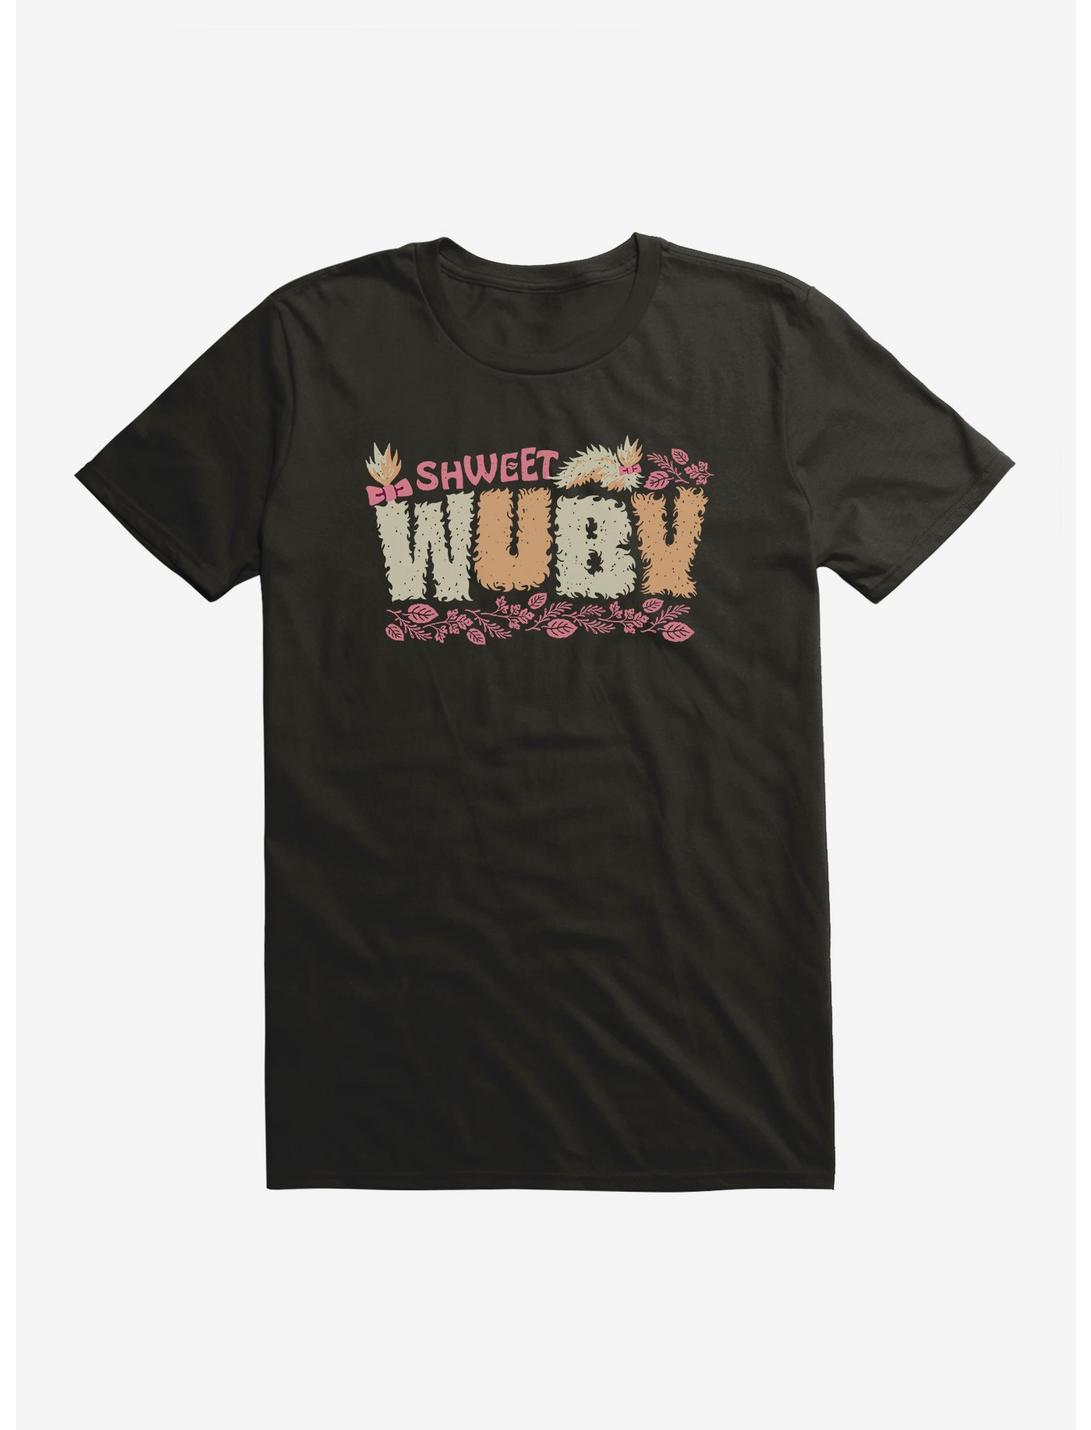 The Tiny Chef Show Shweet Wuby T-Shirt, , hi-res